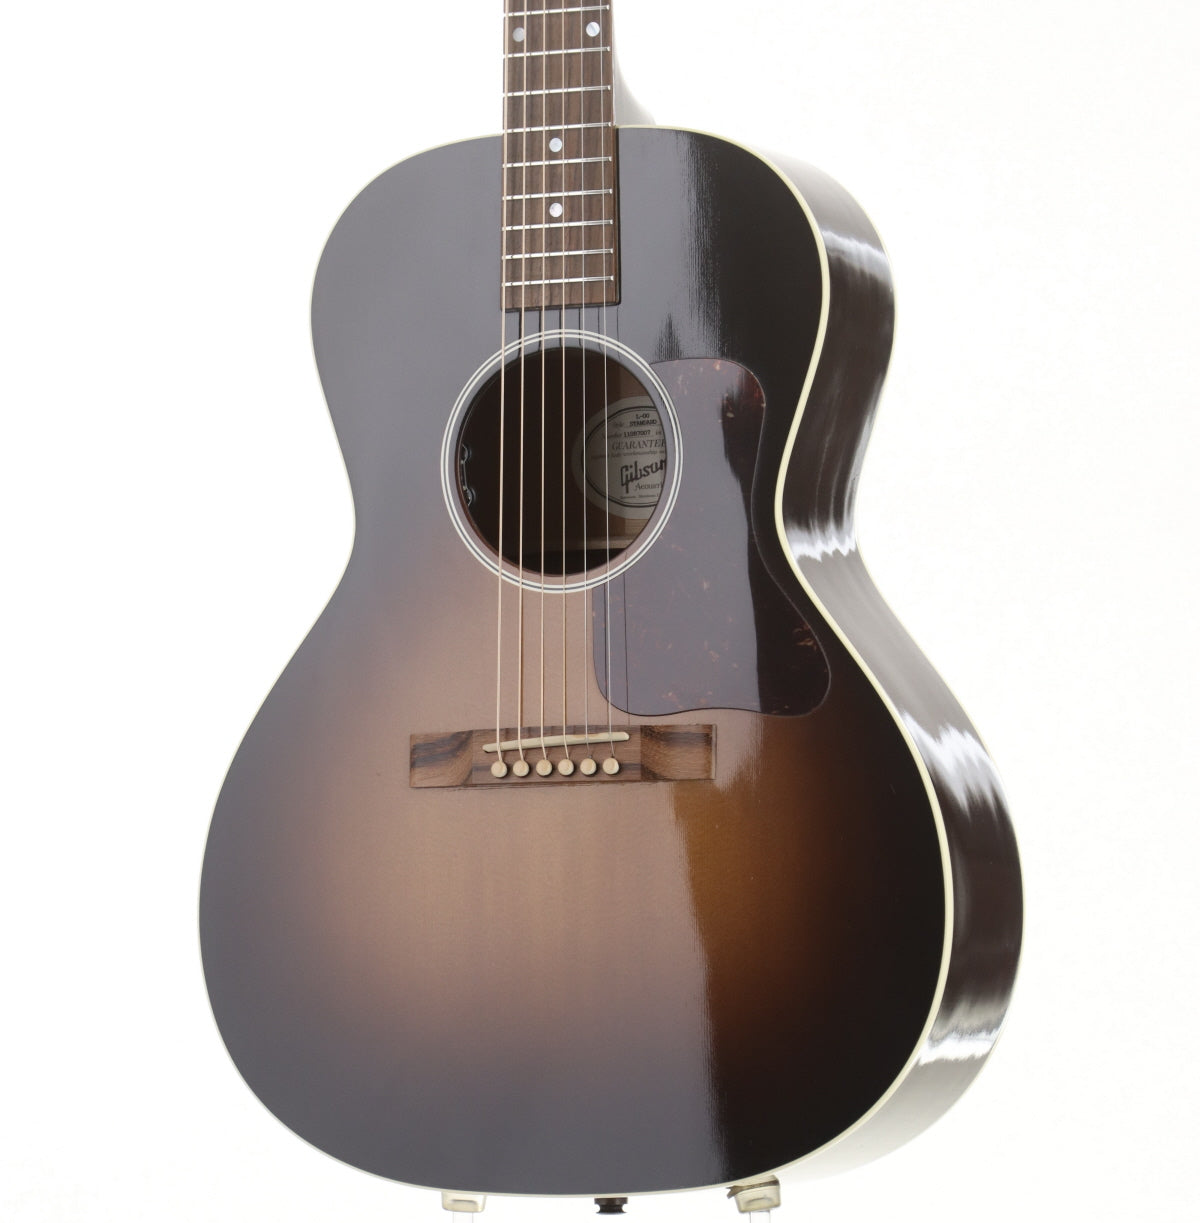 [SN 11087007] USED Gibson / L-00 Standard Vintage Sunburst [03]